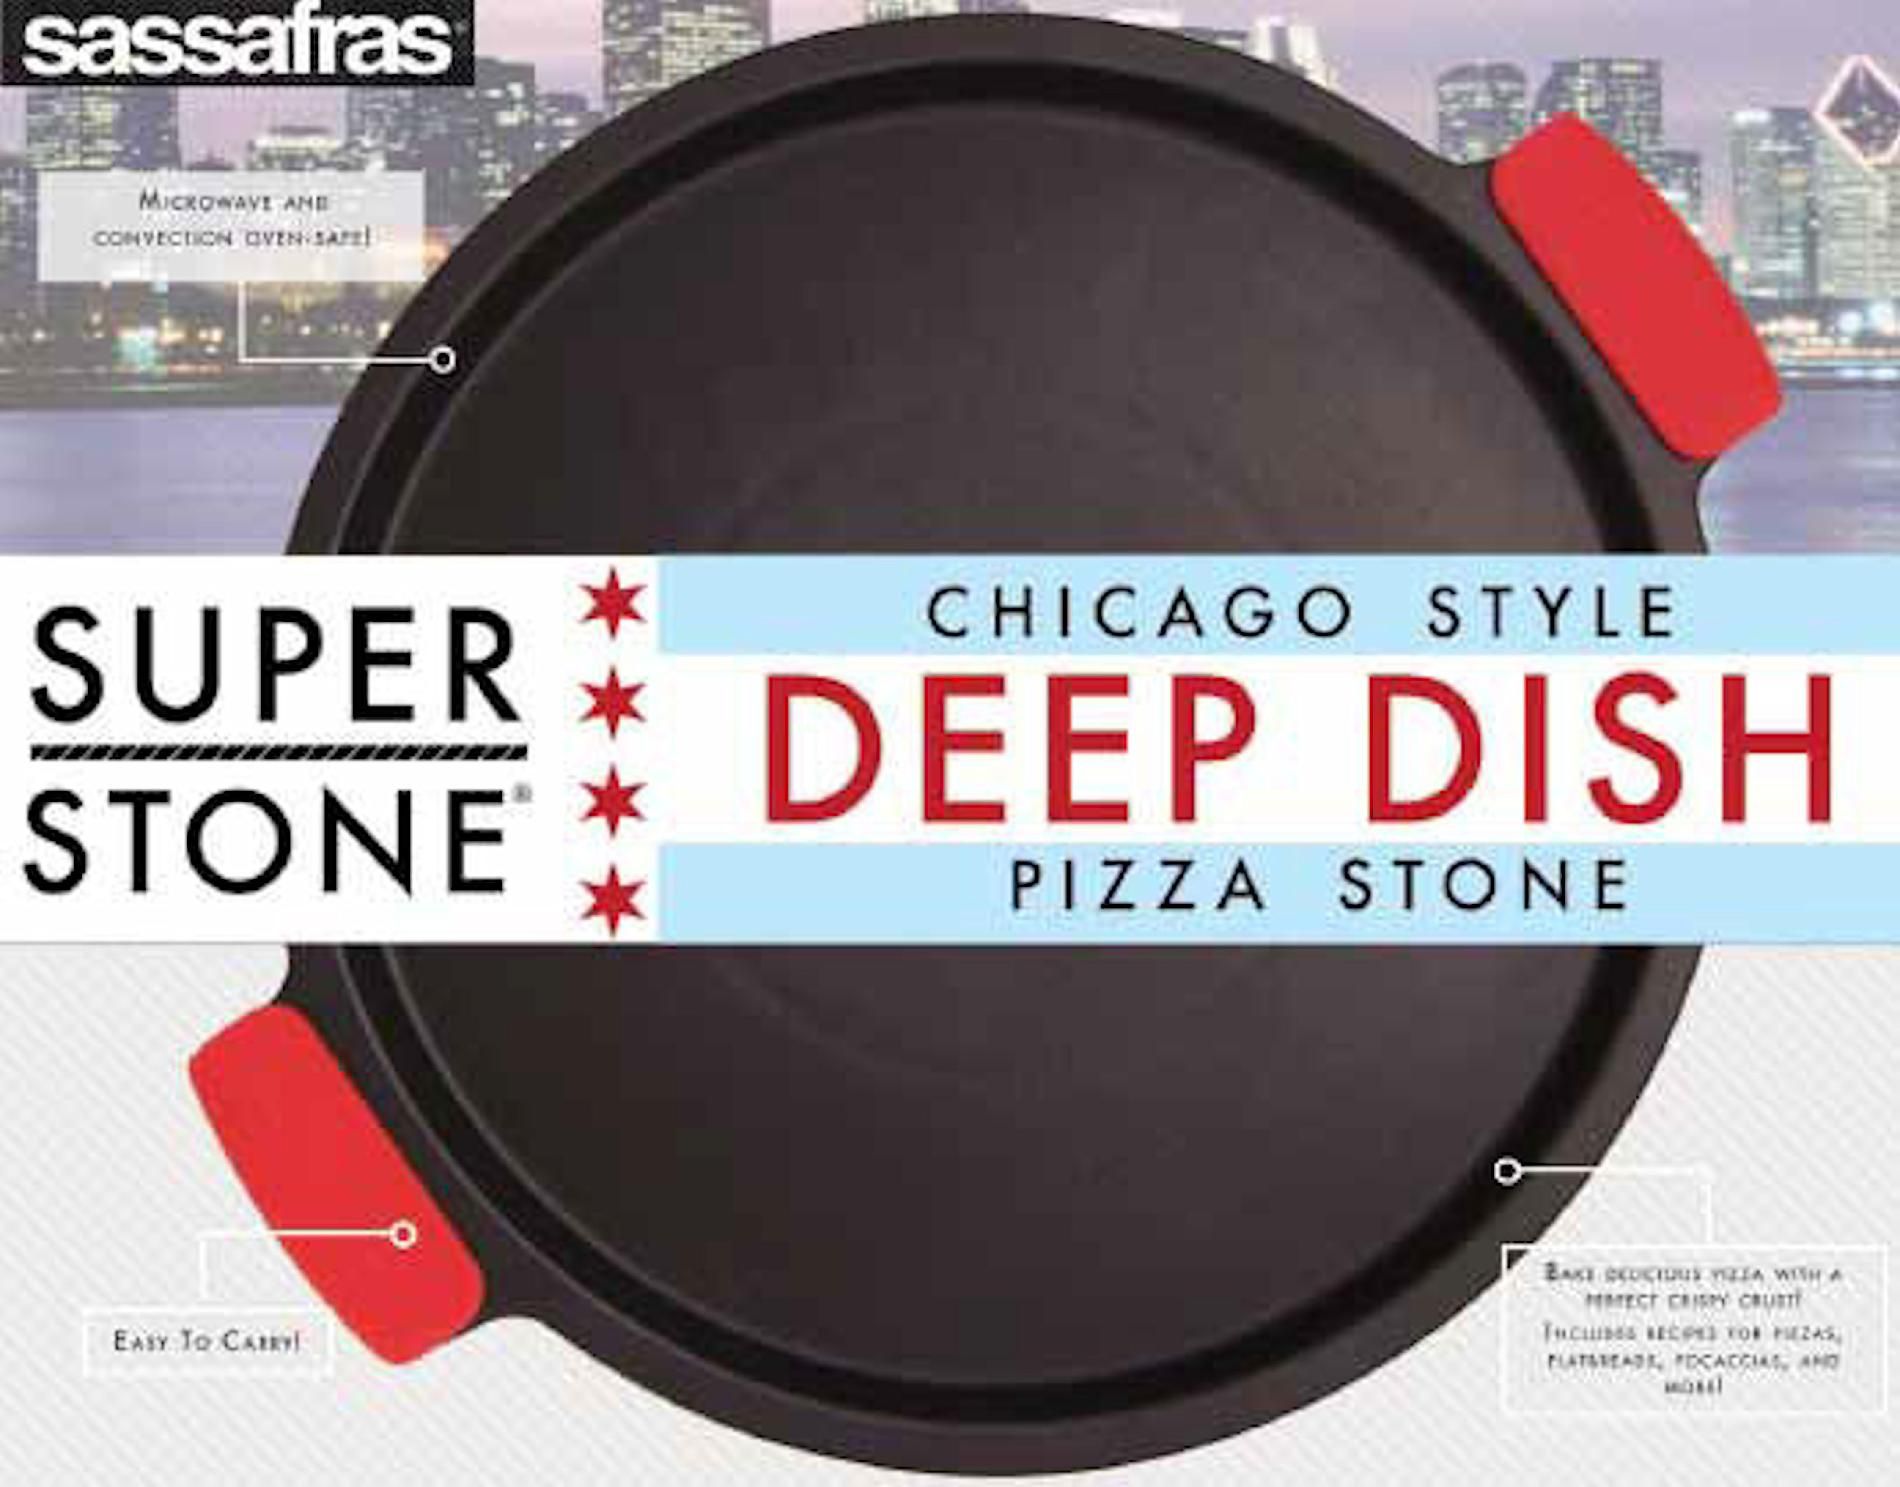 Sassafras SuperStone Deep Dish Pizza Stone